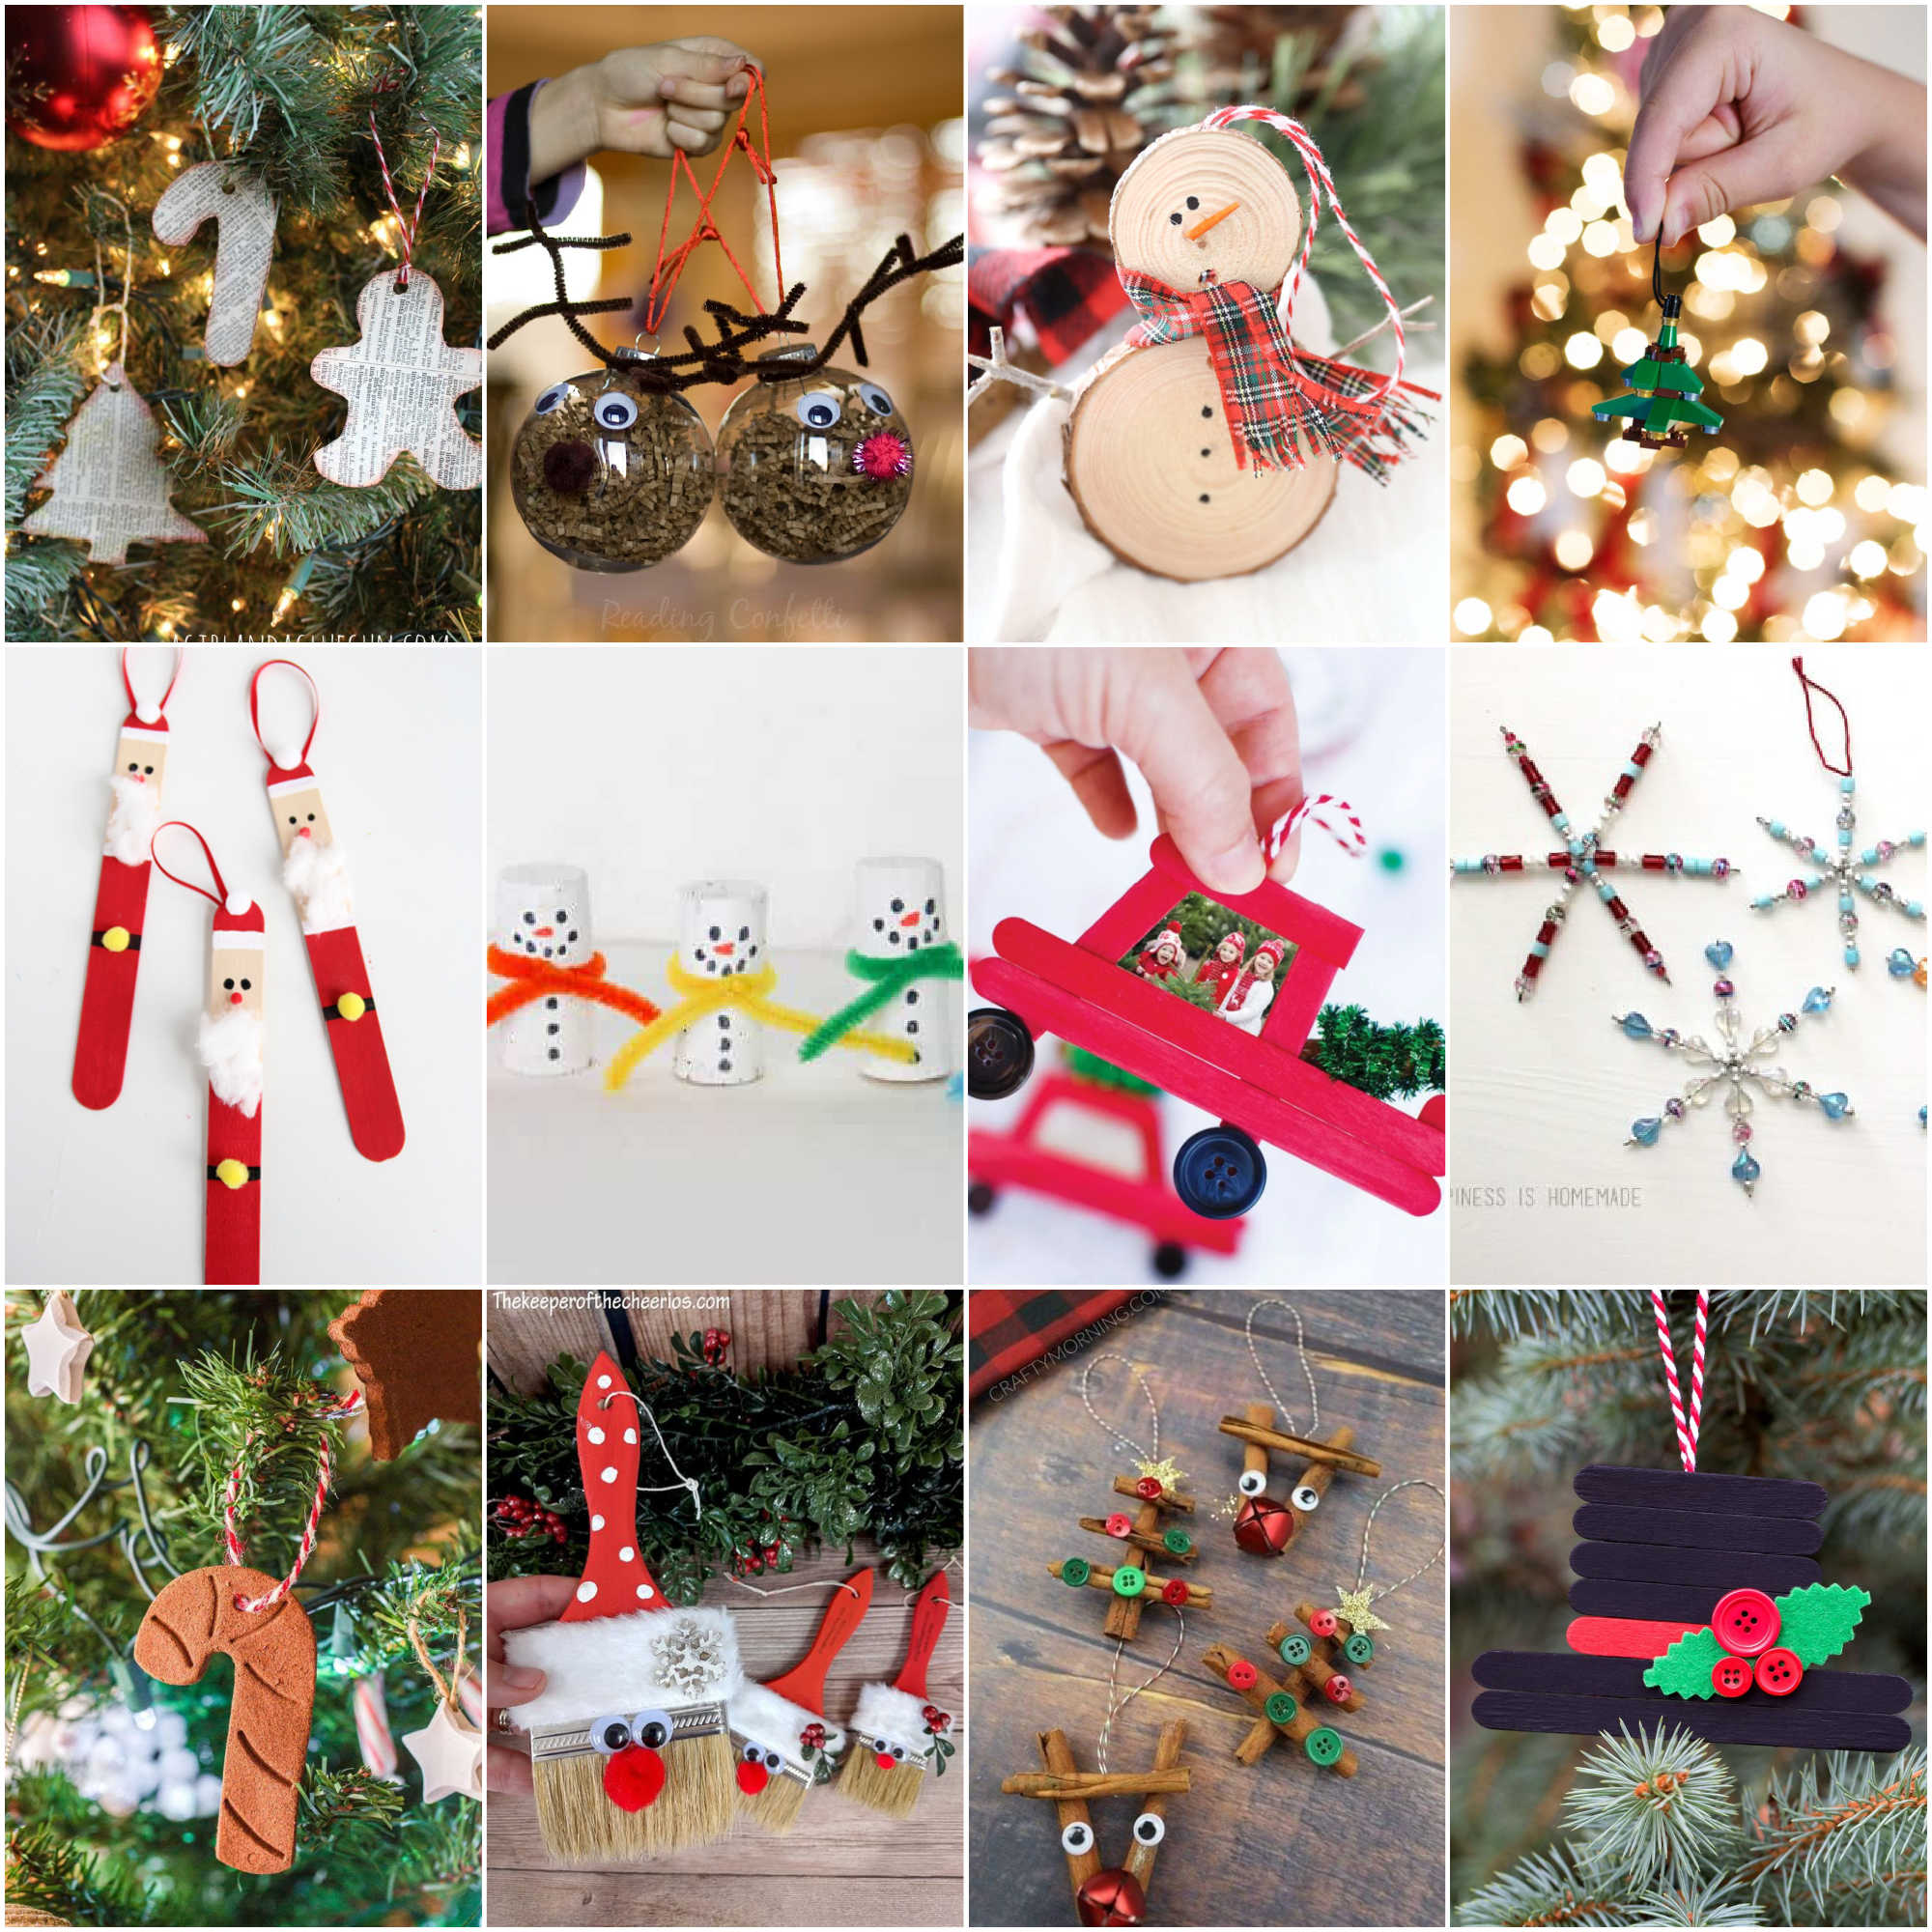 25 SMALL Snowflake WHITE Wood Christmas Ornament Supplies DIY